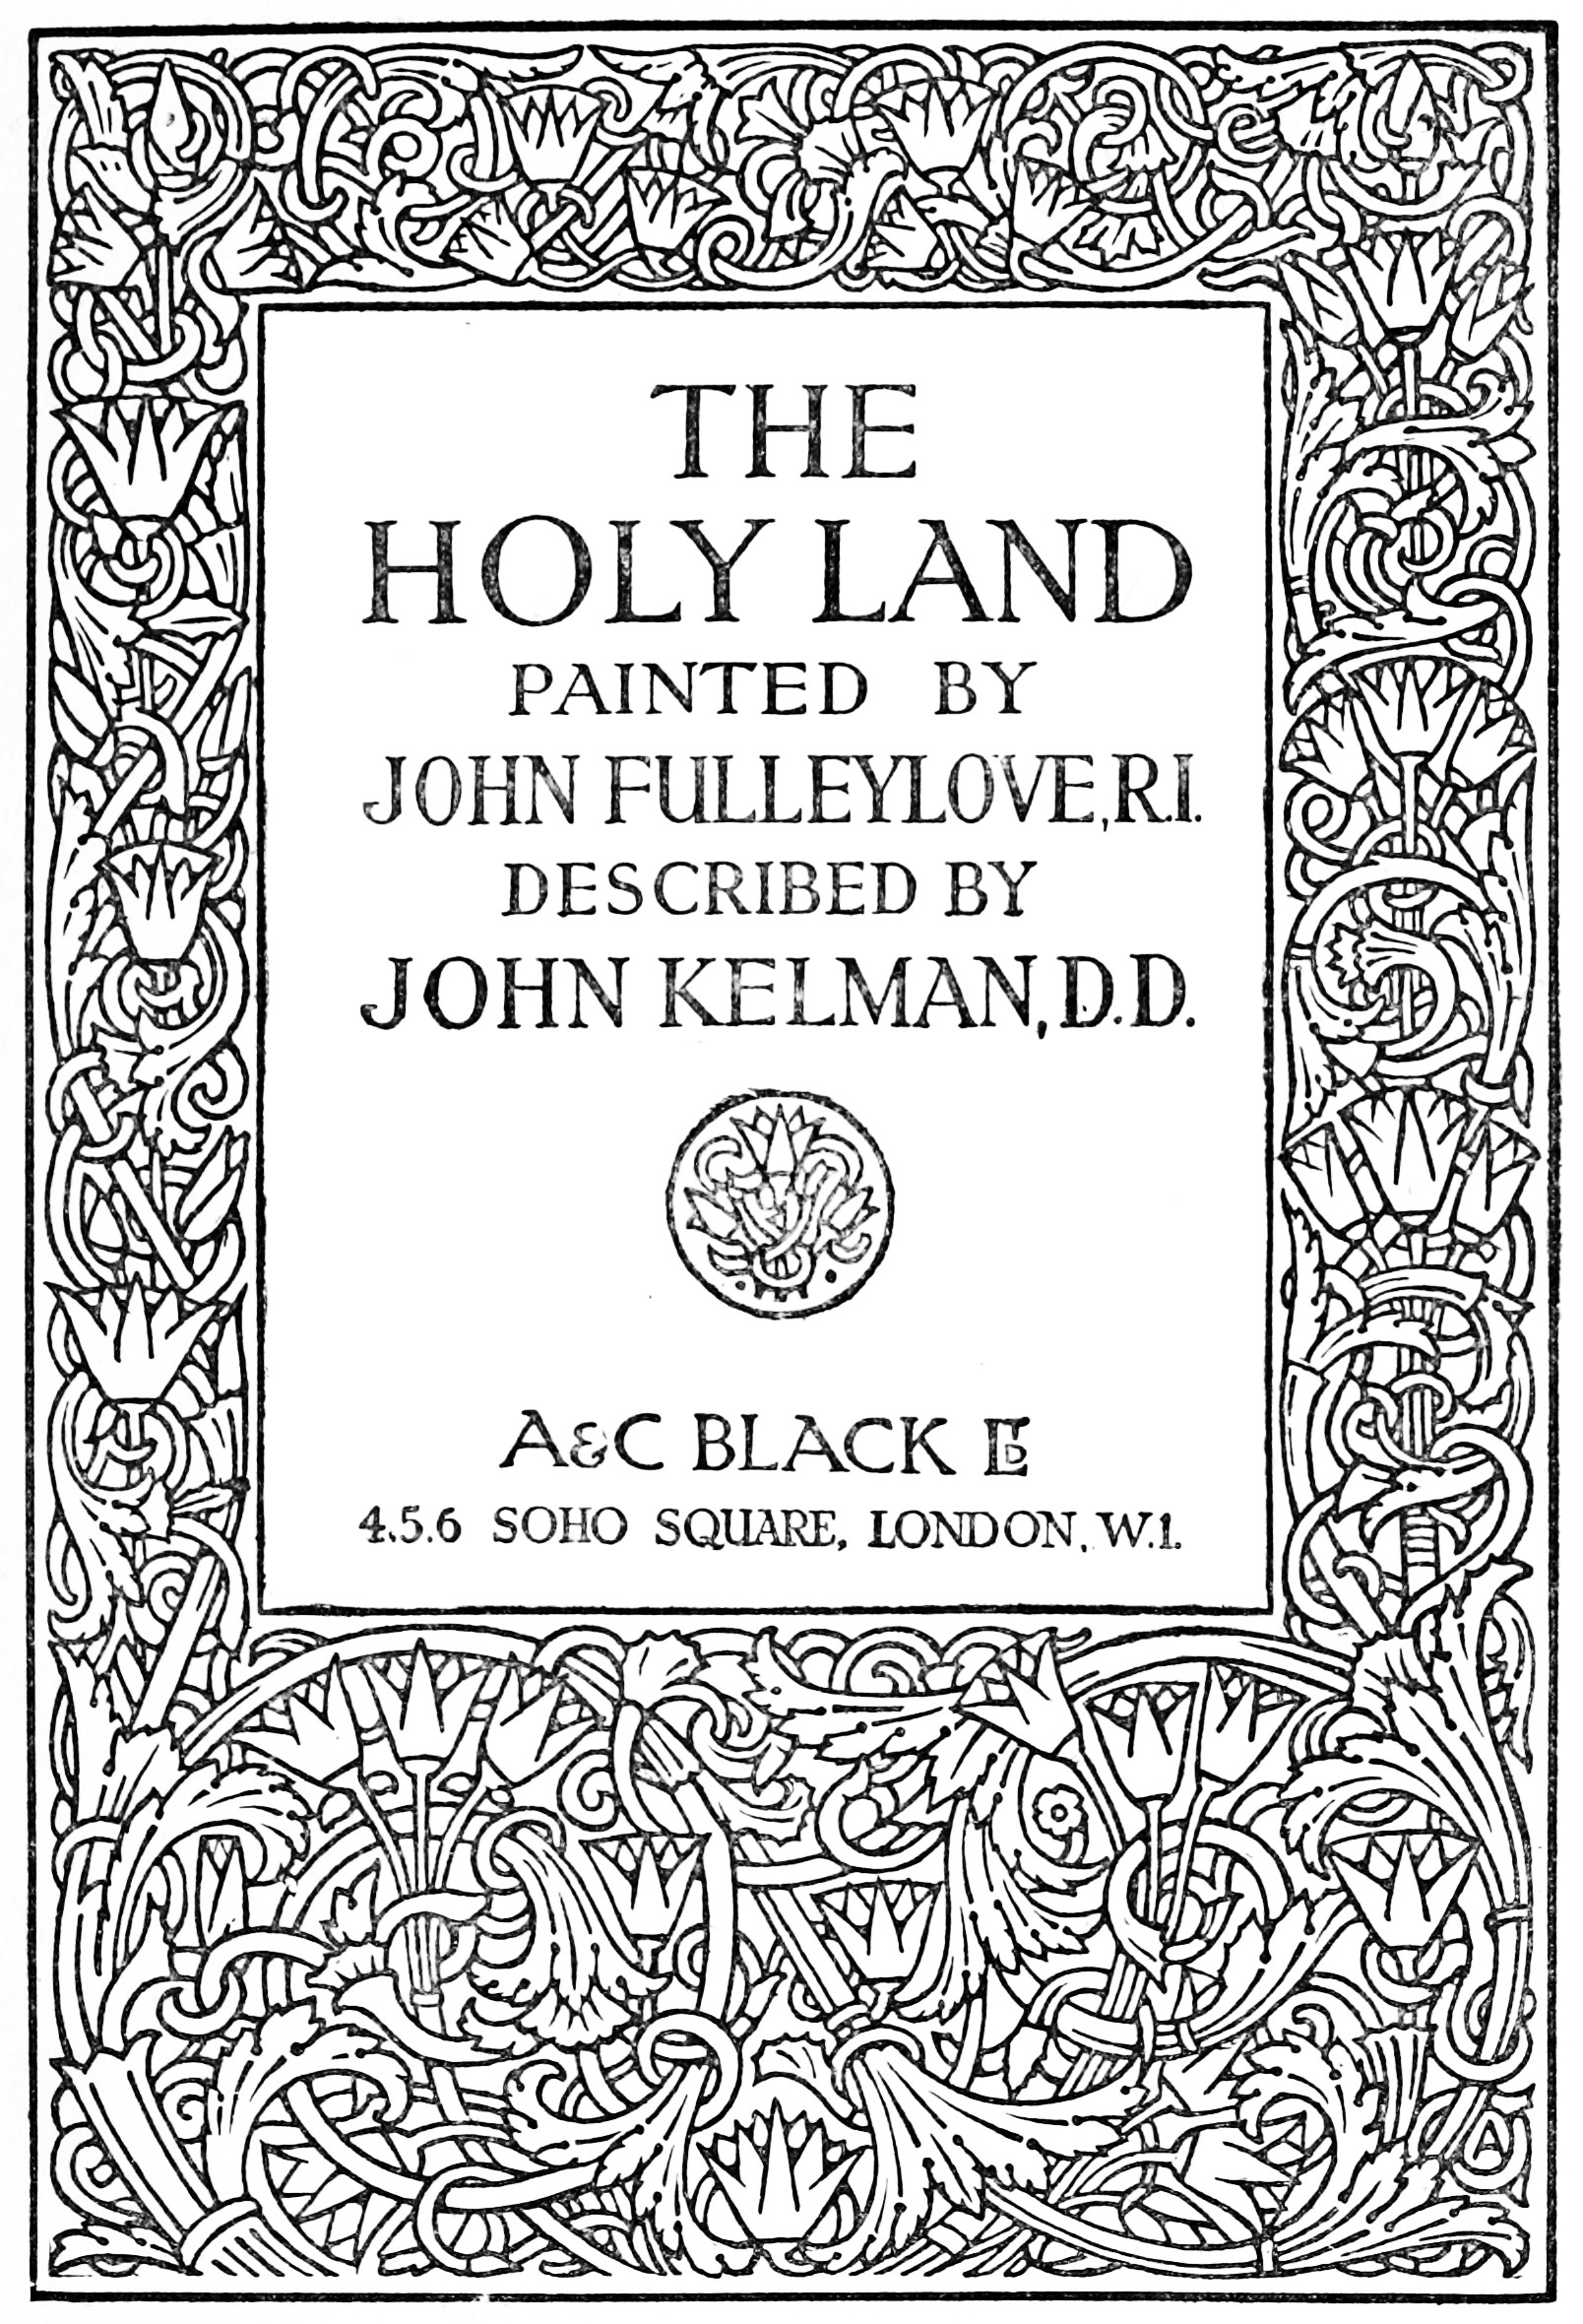 THE HOLY LAND  PAINTED BY JOHN FULLEYLOVE, R.I.  DESCRIBED BY JOHN KELMAN, D.D.  A&C BLACK LTD 4.5.6 SOHO SQUARE, LONDON, W.1.